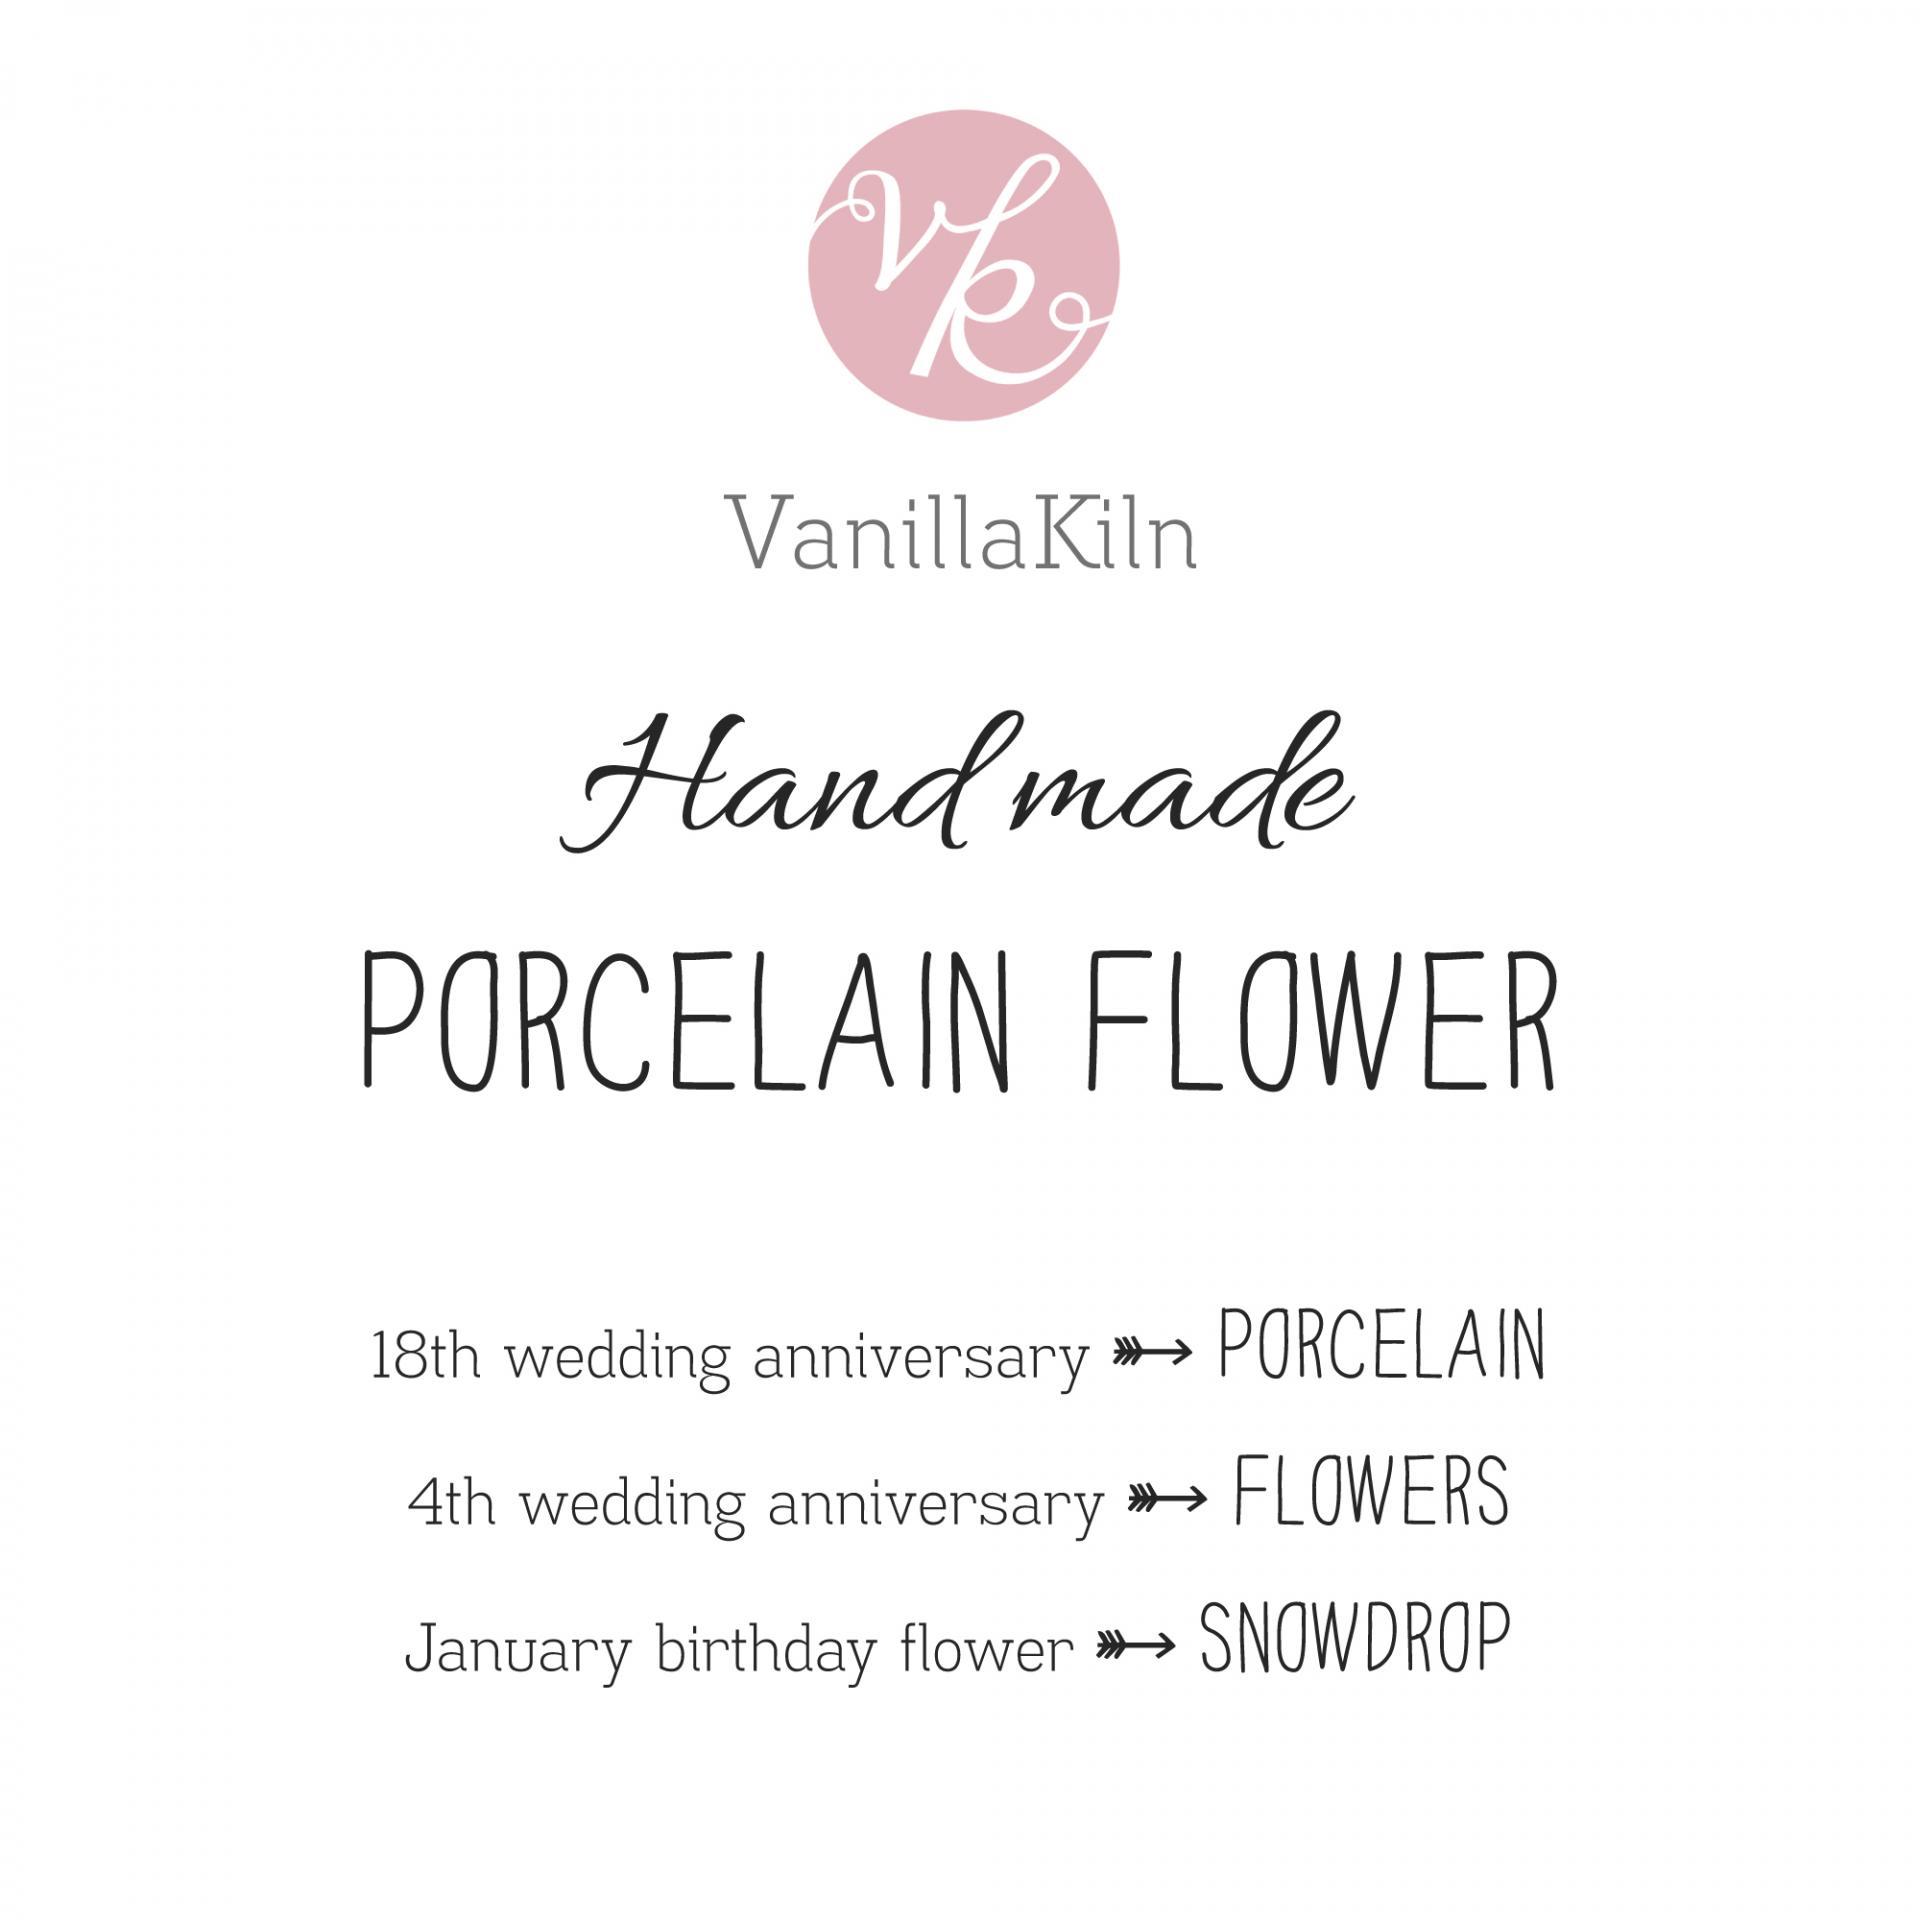 VanillaKiln, hand made porcelain flower, 18th anniversary porcelain, 4th anniversary flowers, January birthday flower snowdro